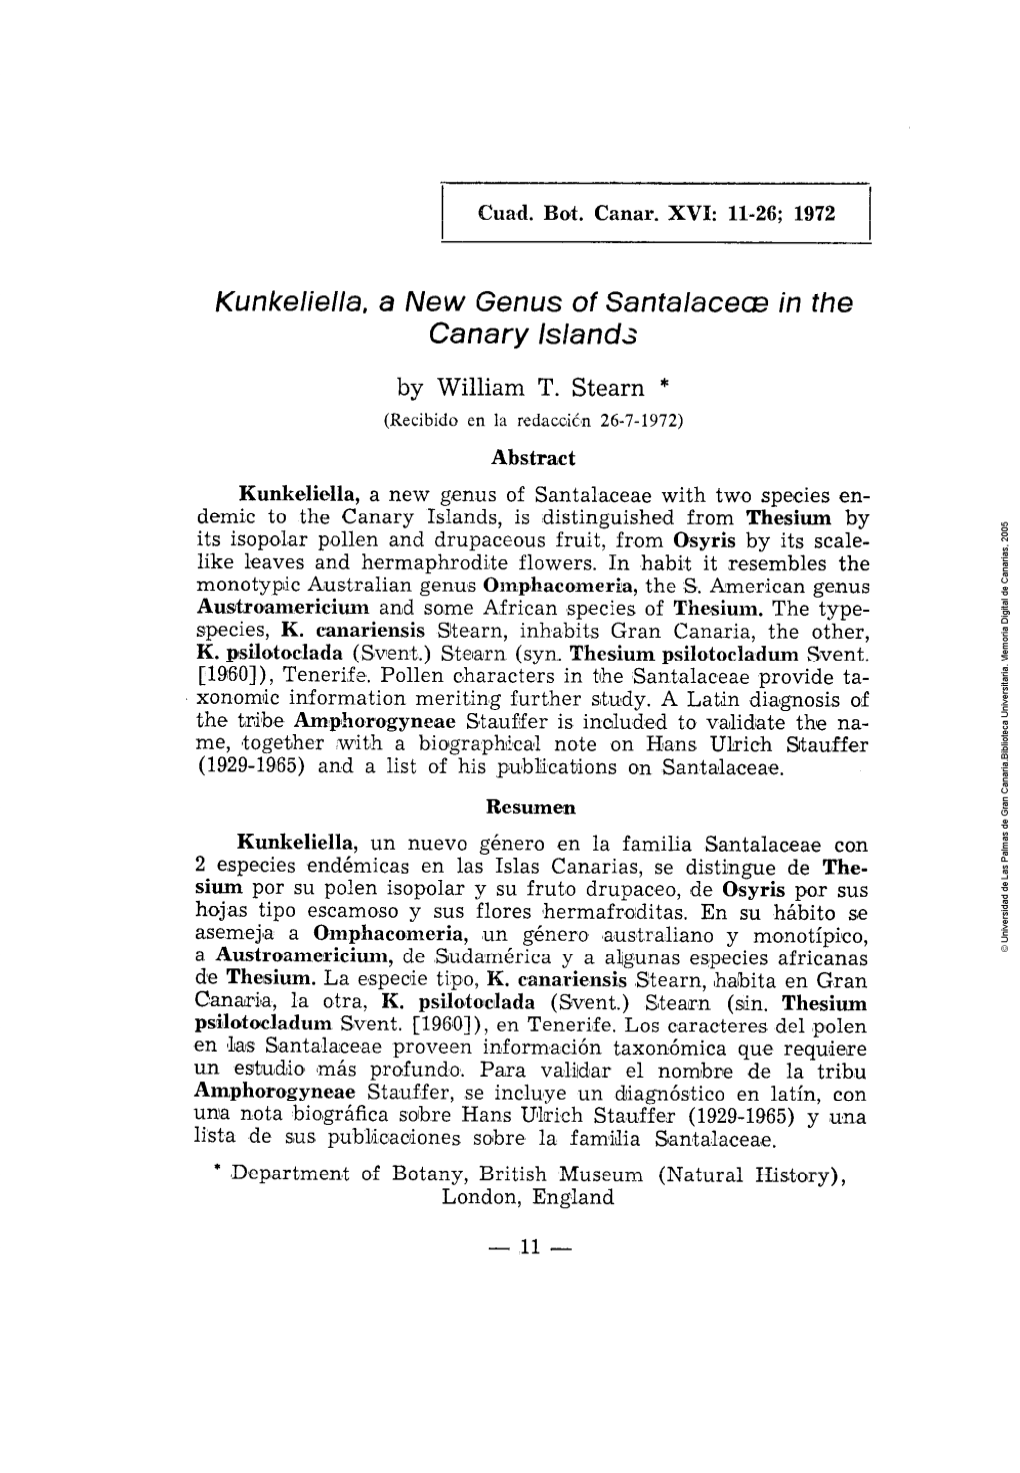 Kunkeliella, a New Genus of Santalaceae in the Canary Islands